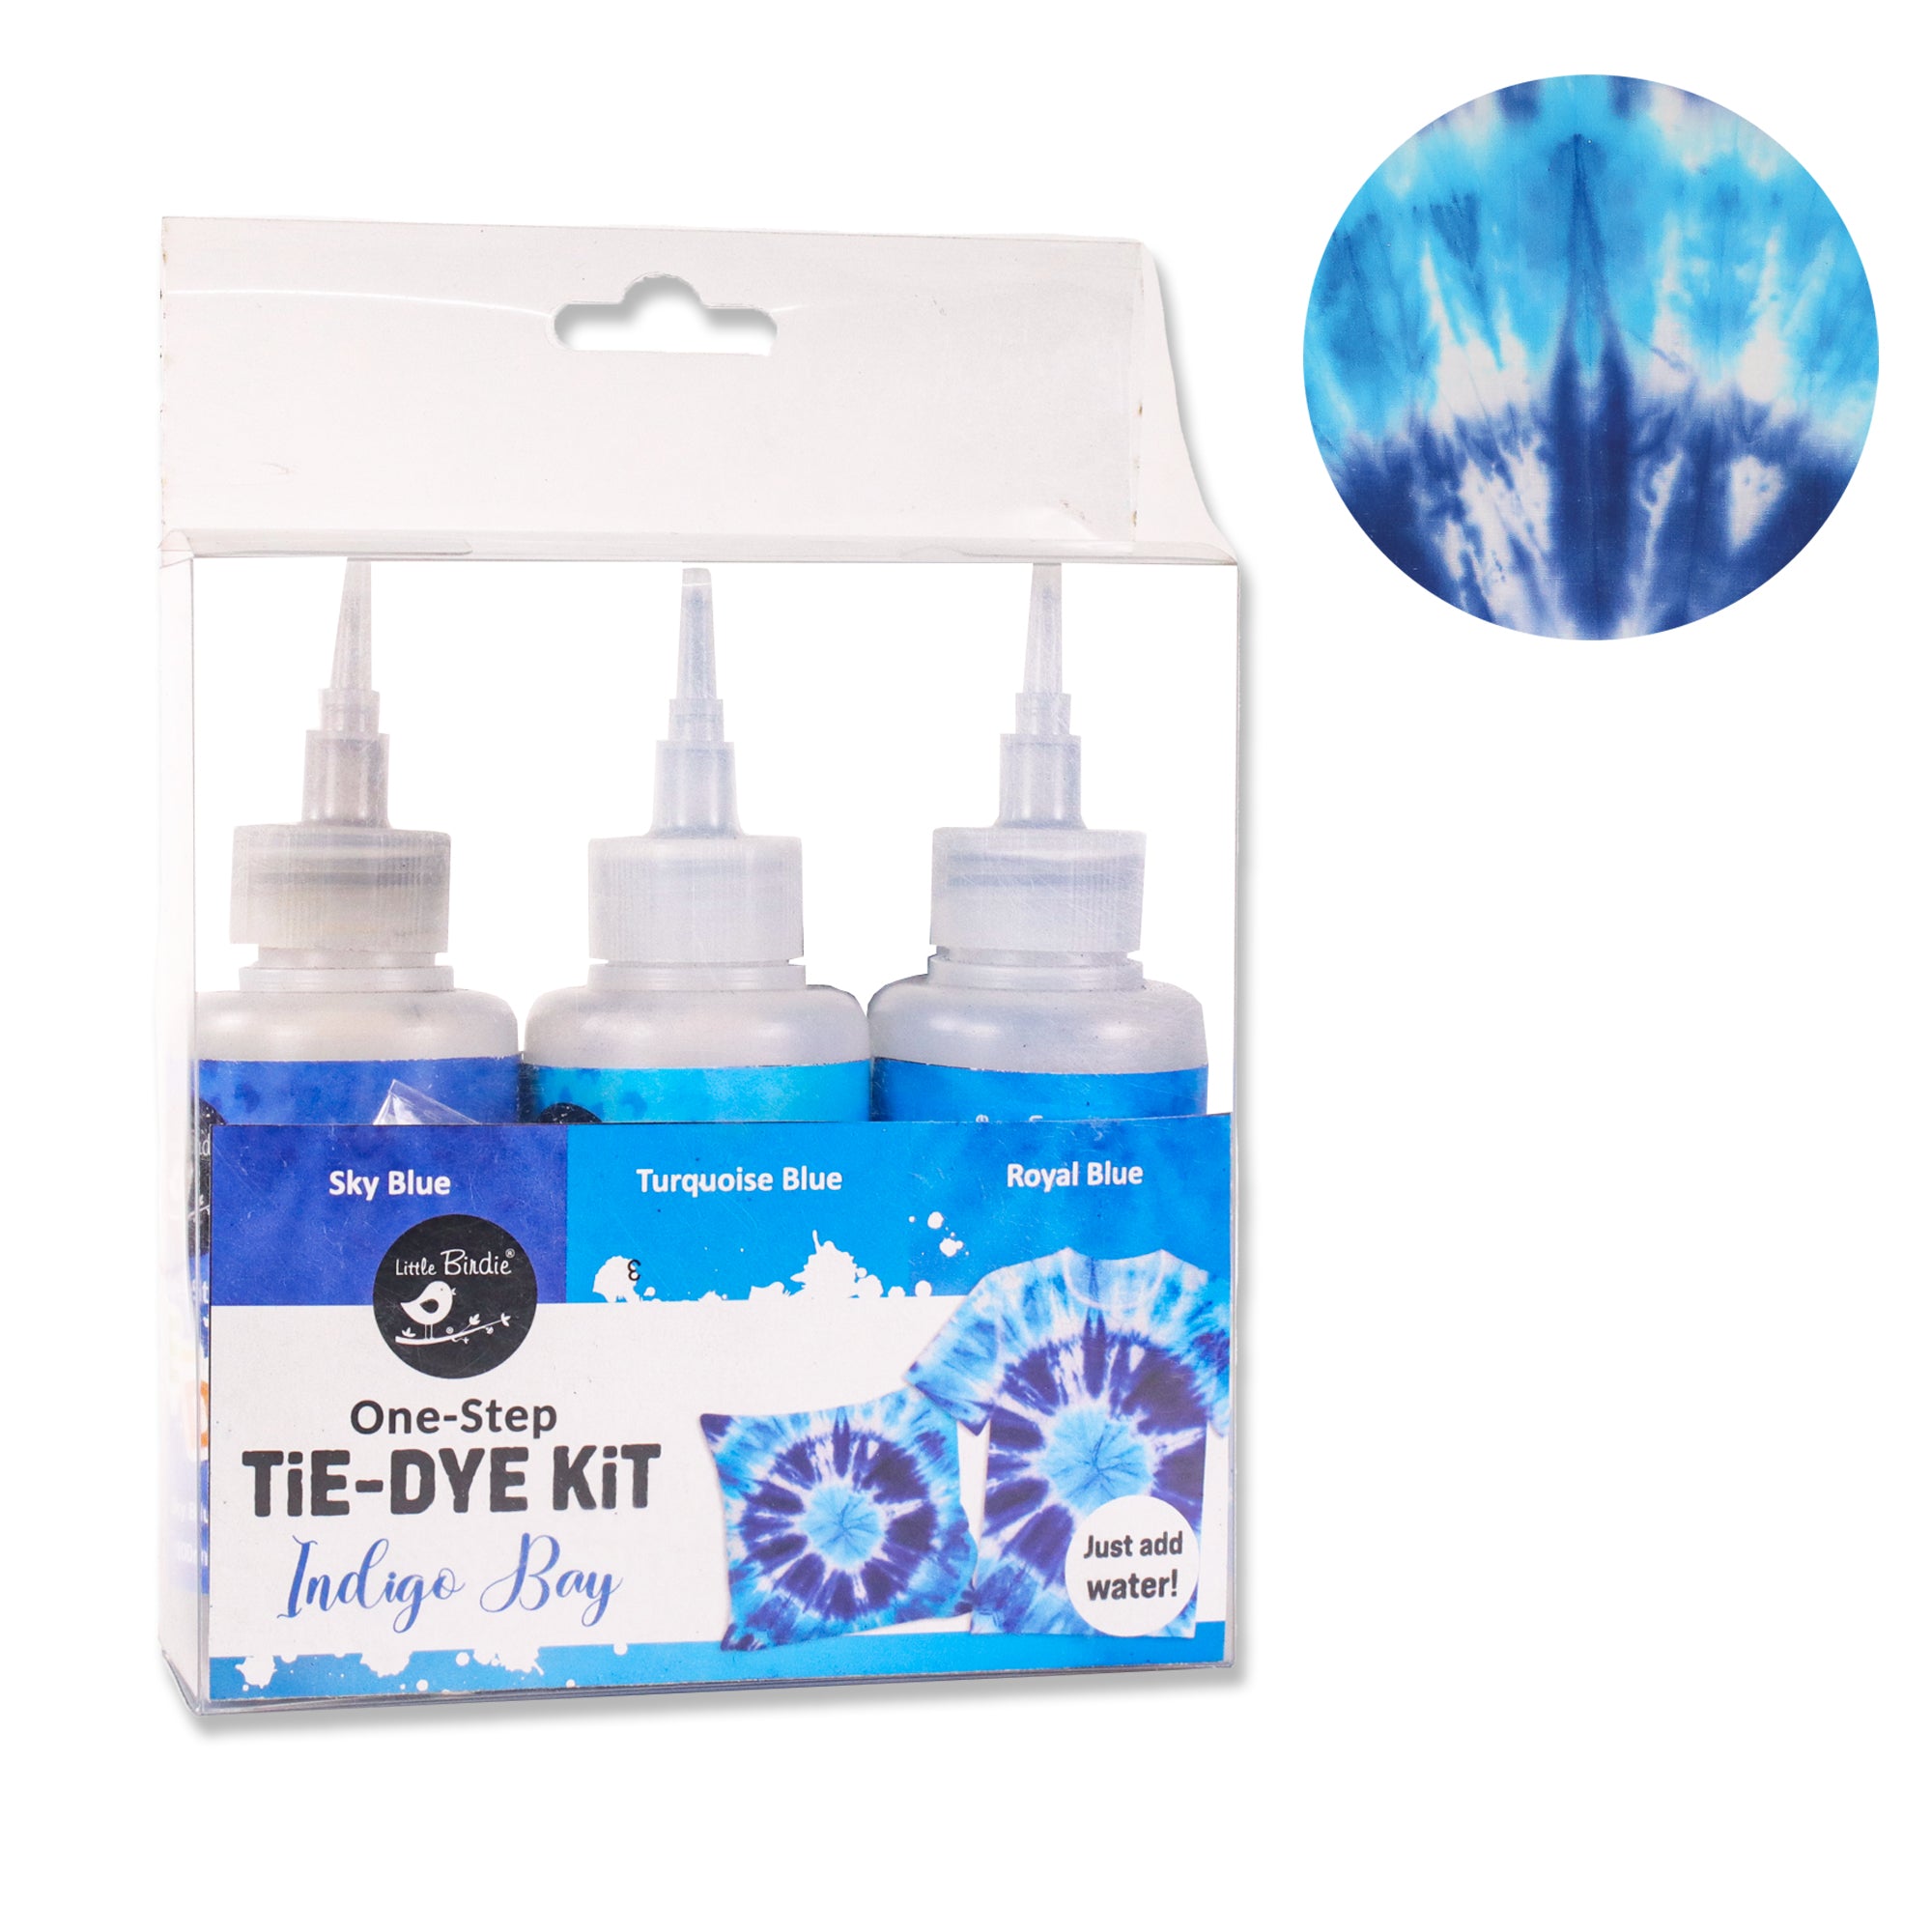 One Step Tie Dye Indigo Bay Kit Acetate Box Lb